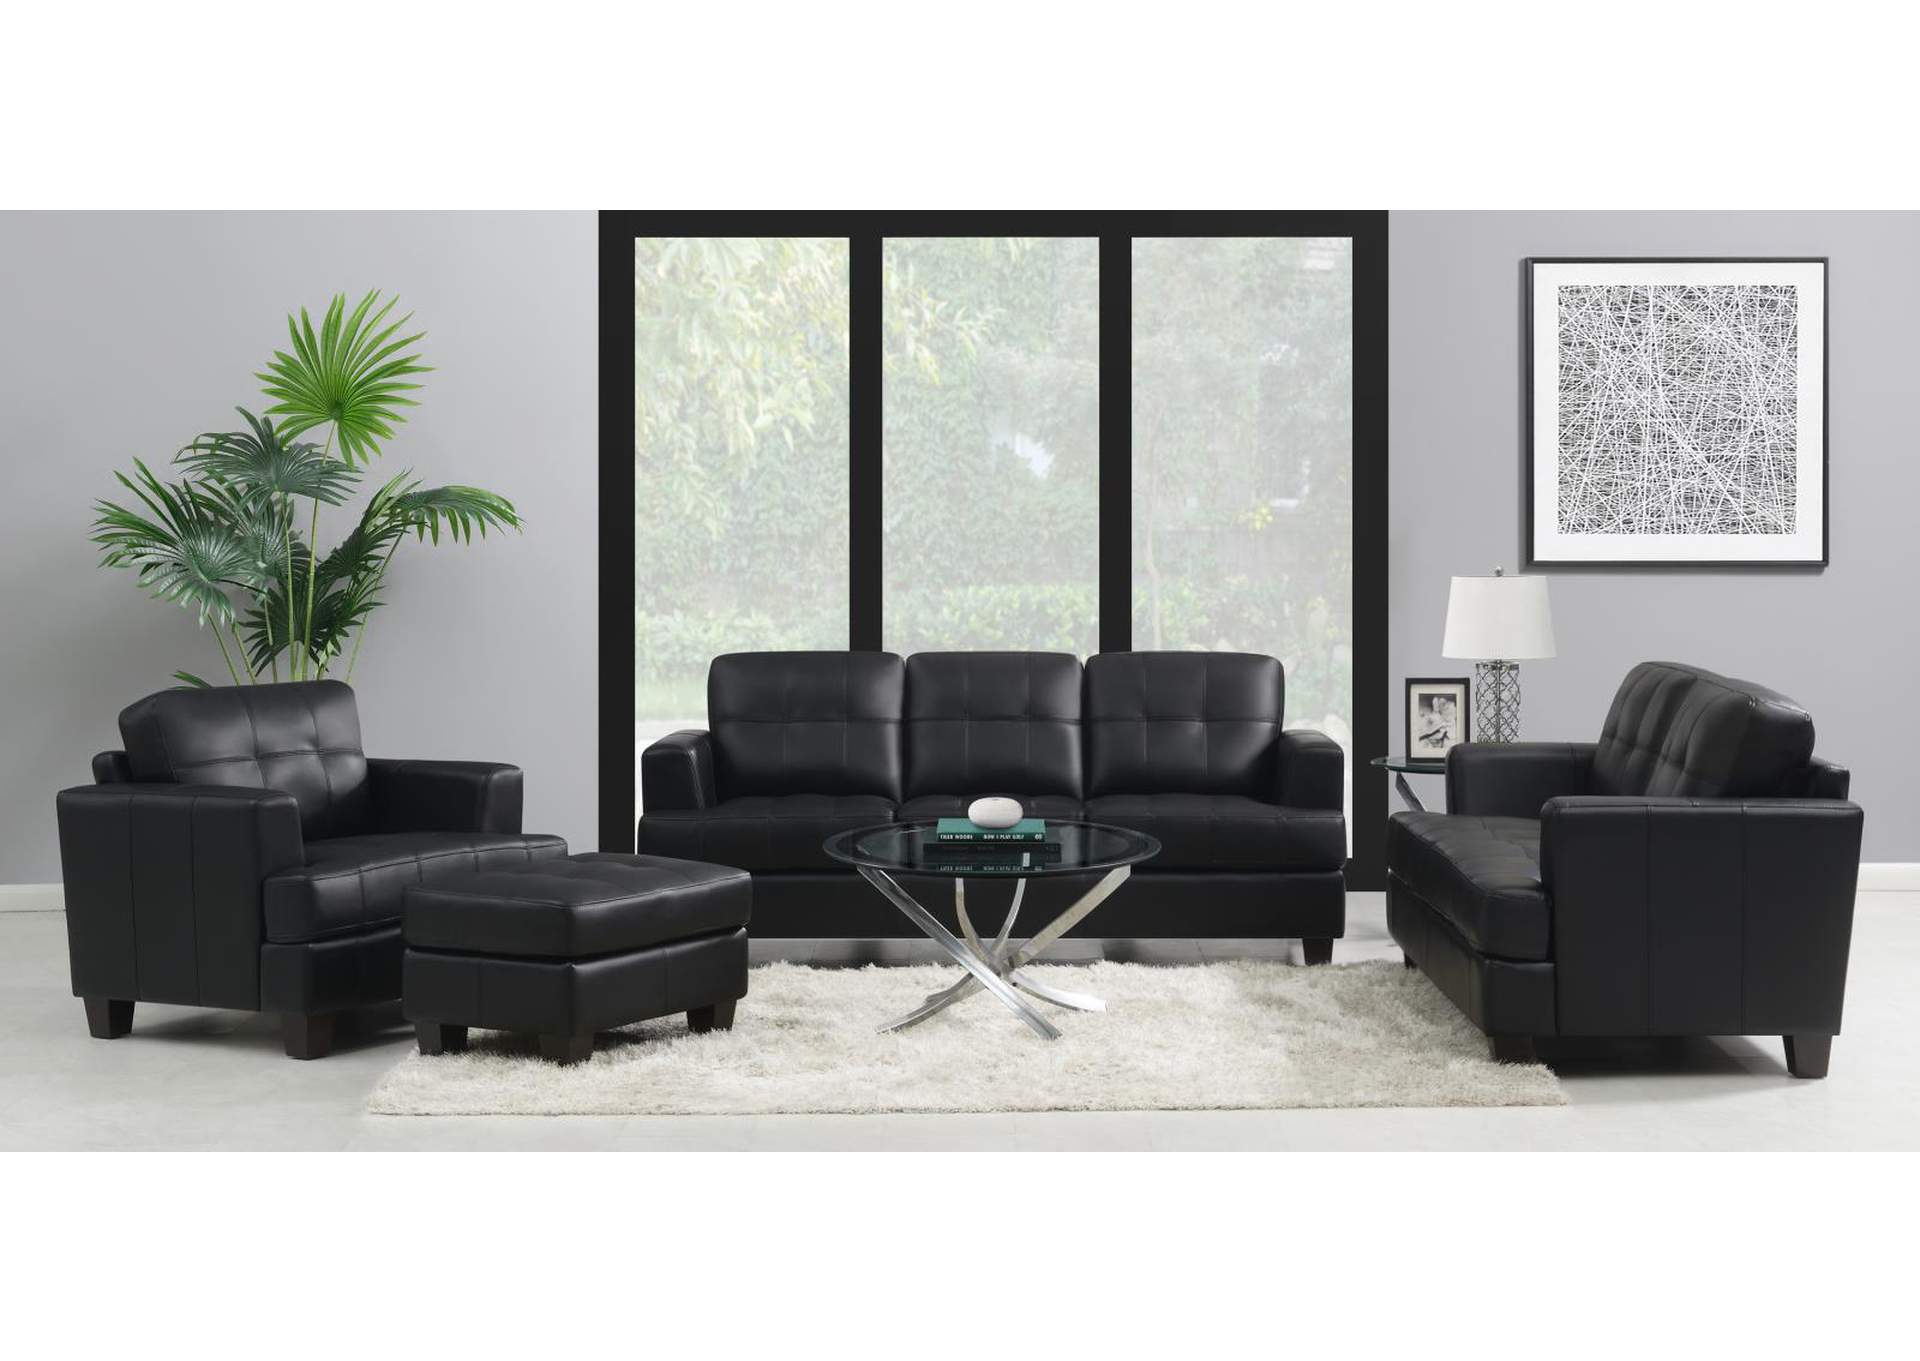 St-205 Black Sofa,Coaster Furniture